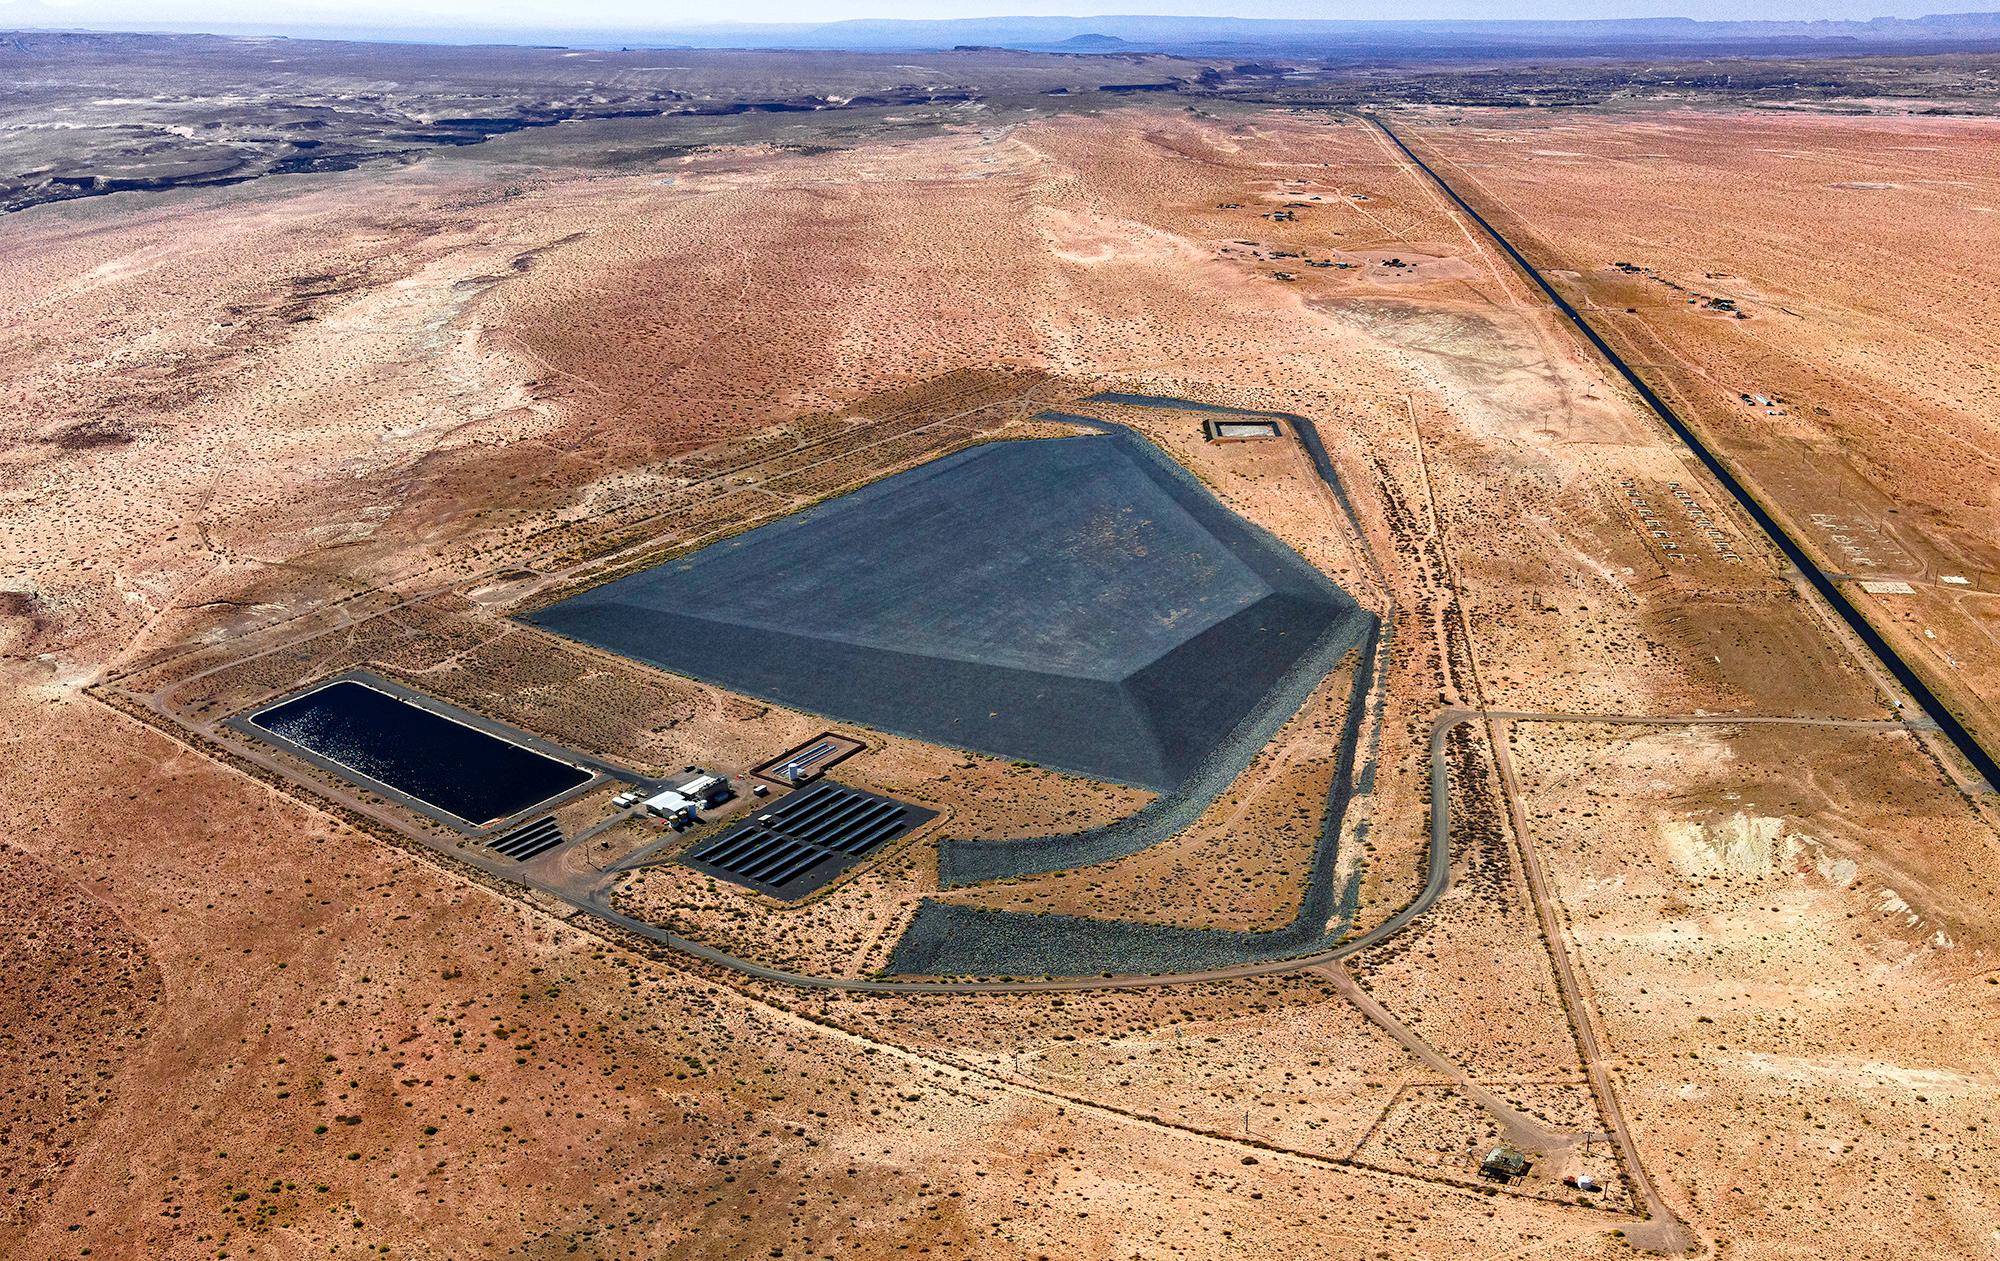 Rare Metals Disposal Cell, Tuba City AZ, Navajo Nation - Photograph by Will Wilson